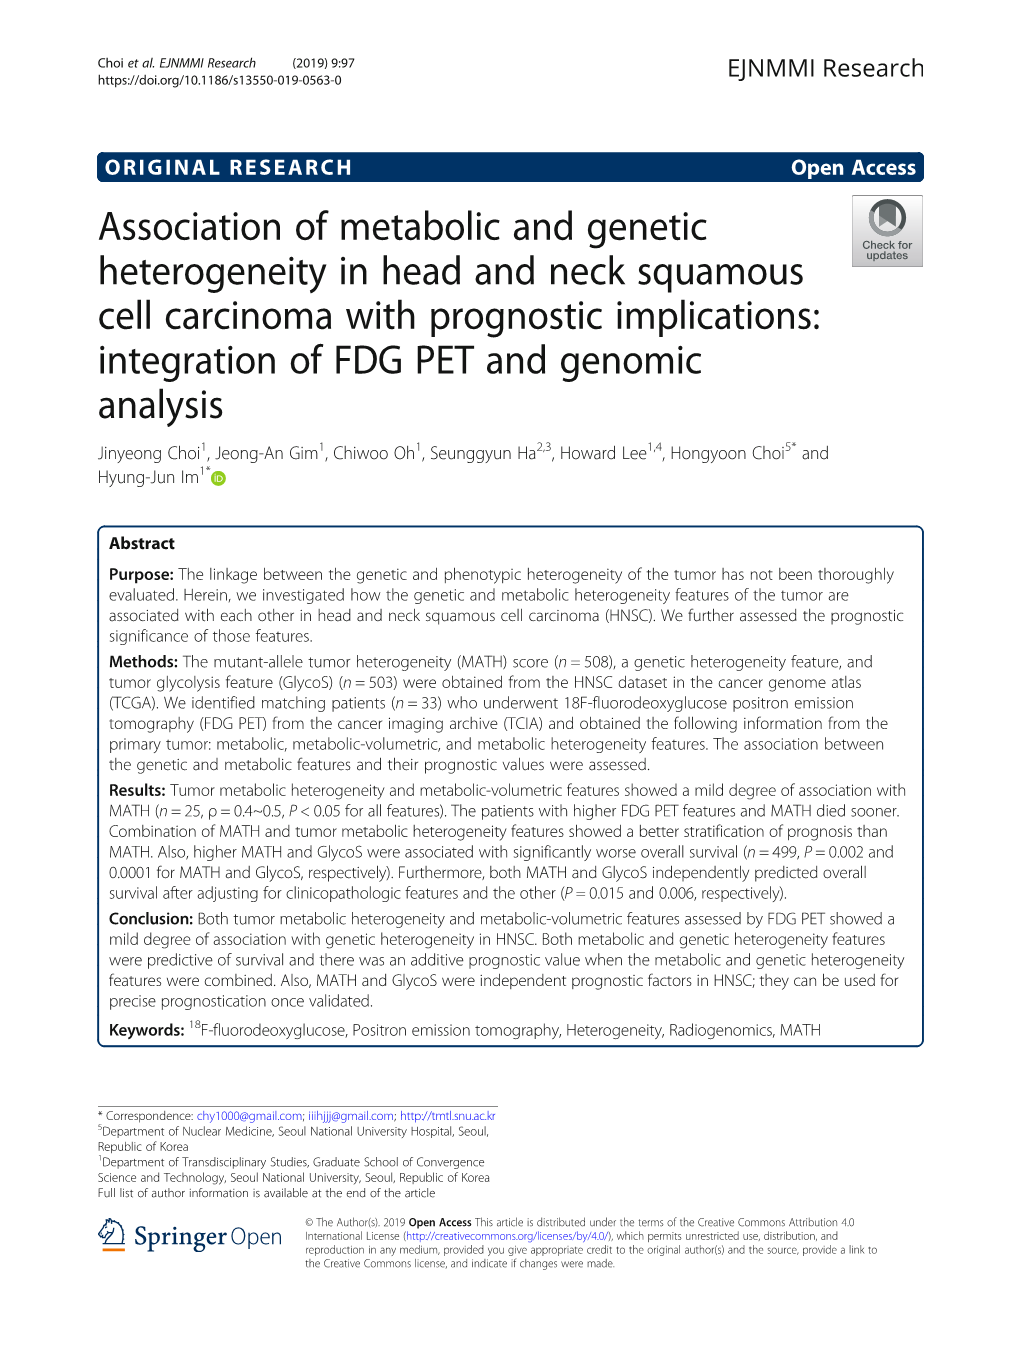 Association of Metabolic and Genetic Heterogeneity